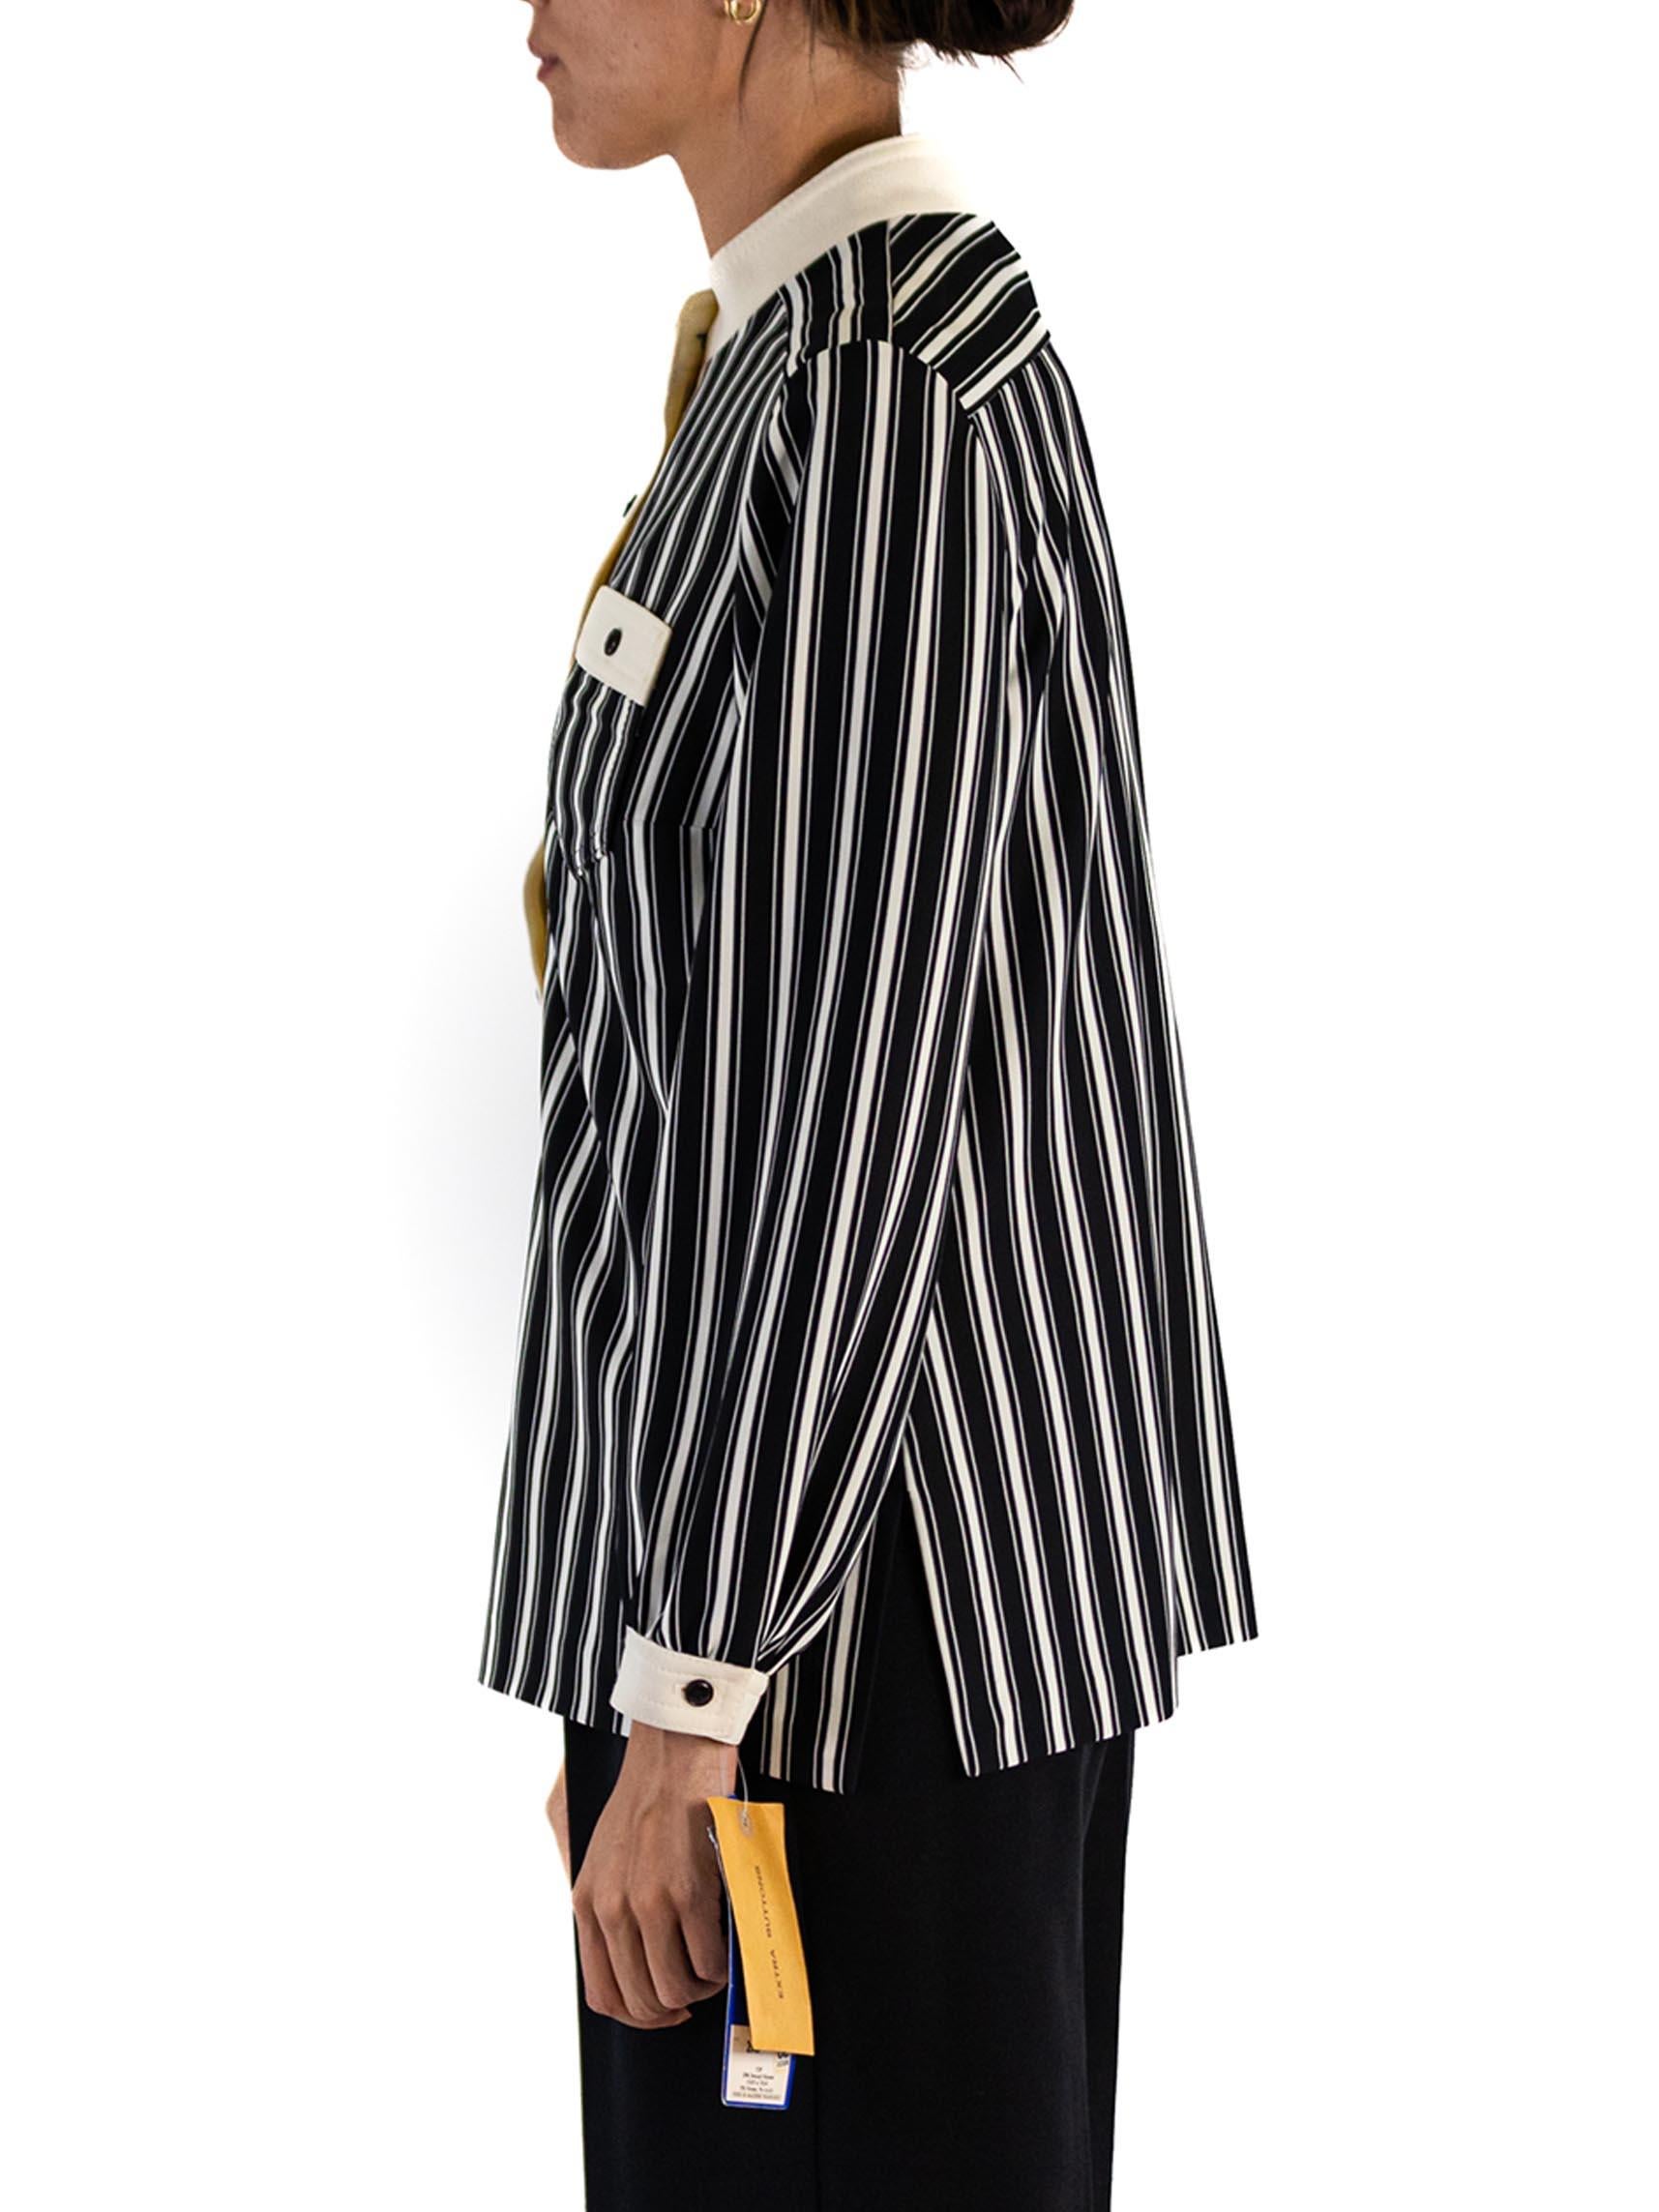 Elastic waist has stretch, original deadstock tag still on item.  1960S Black & White Striped Polyester Double Knit Mod Shirt Pant Ensemble 